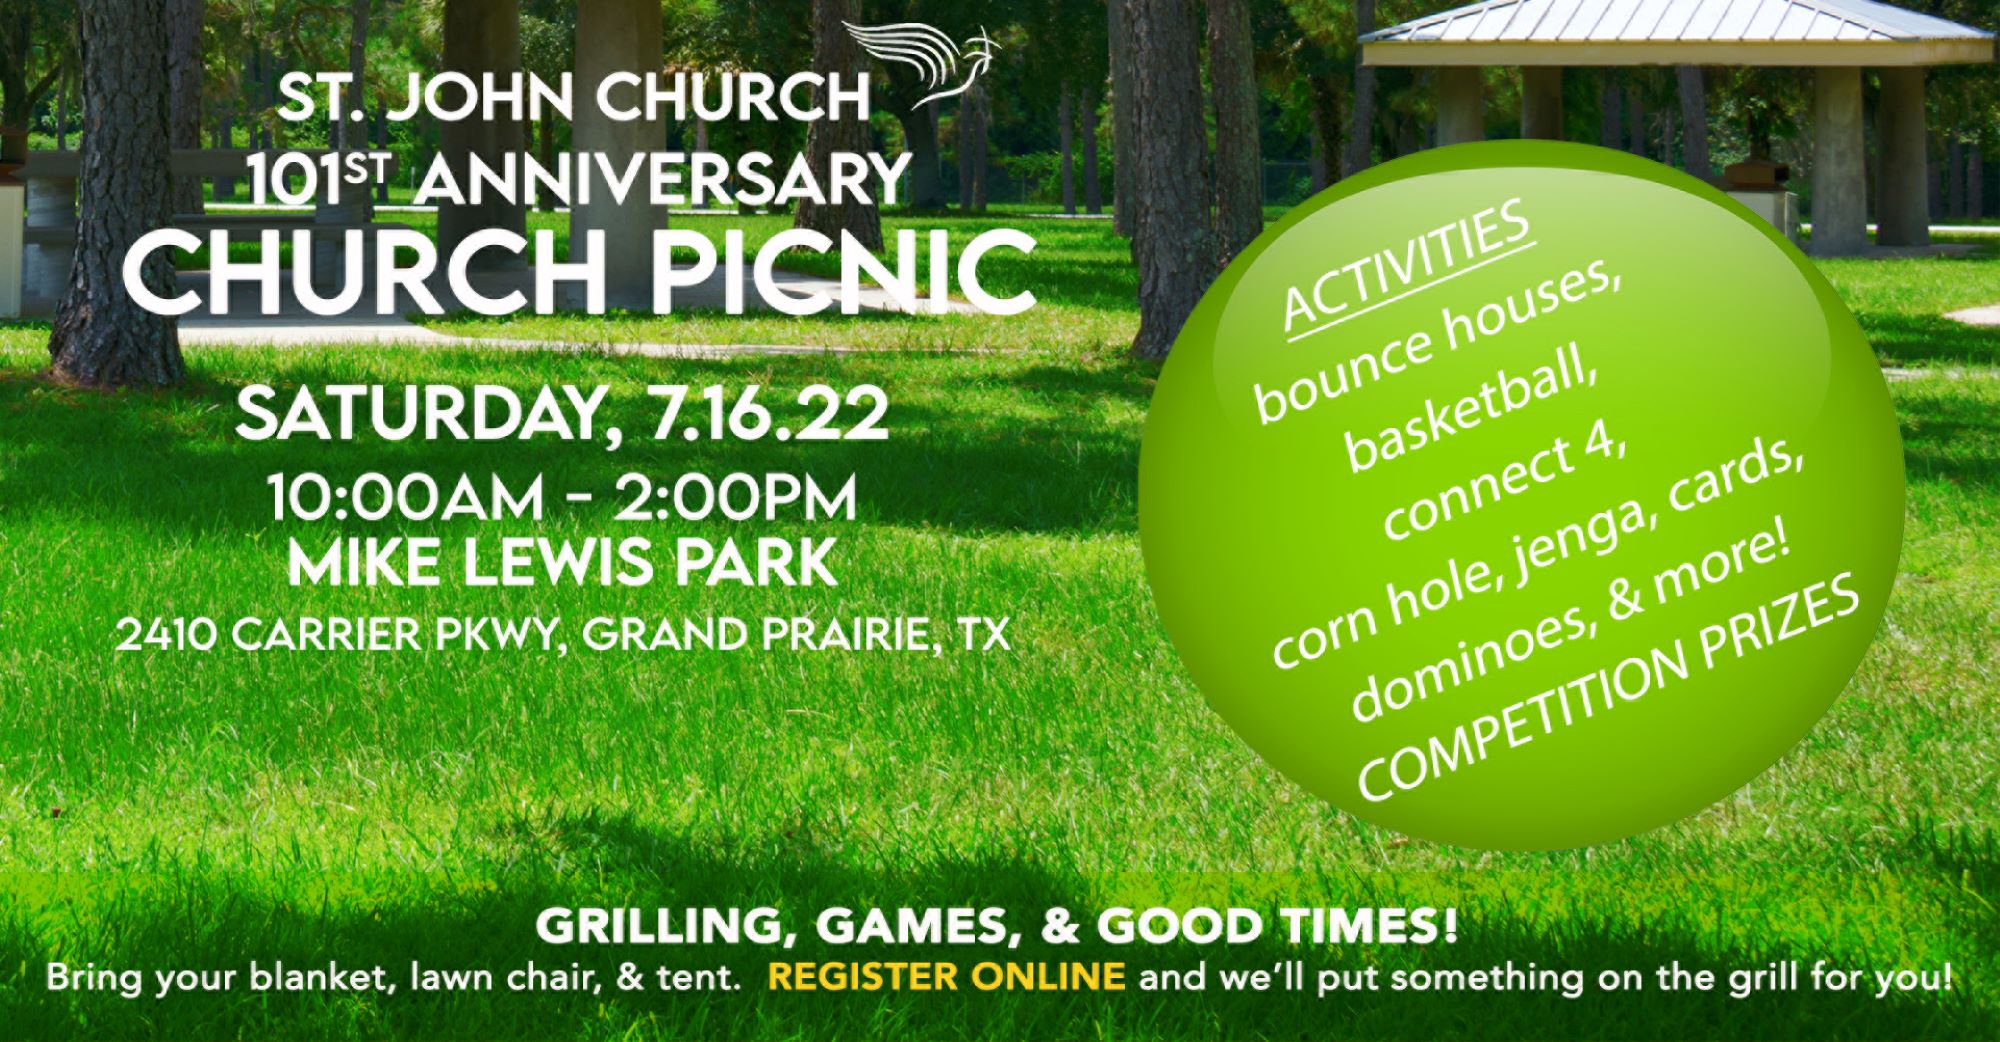 SJC 101st Church Anniversary Picnic - St. John Church Unleashed